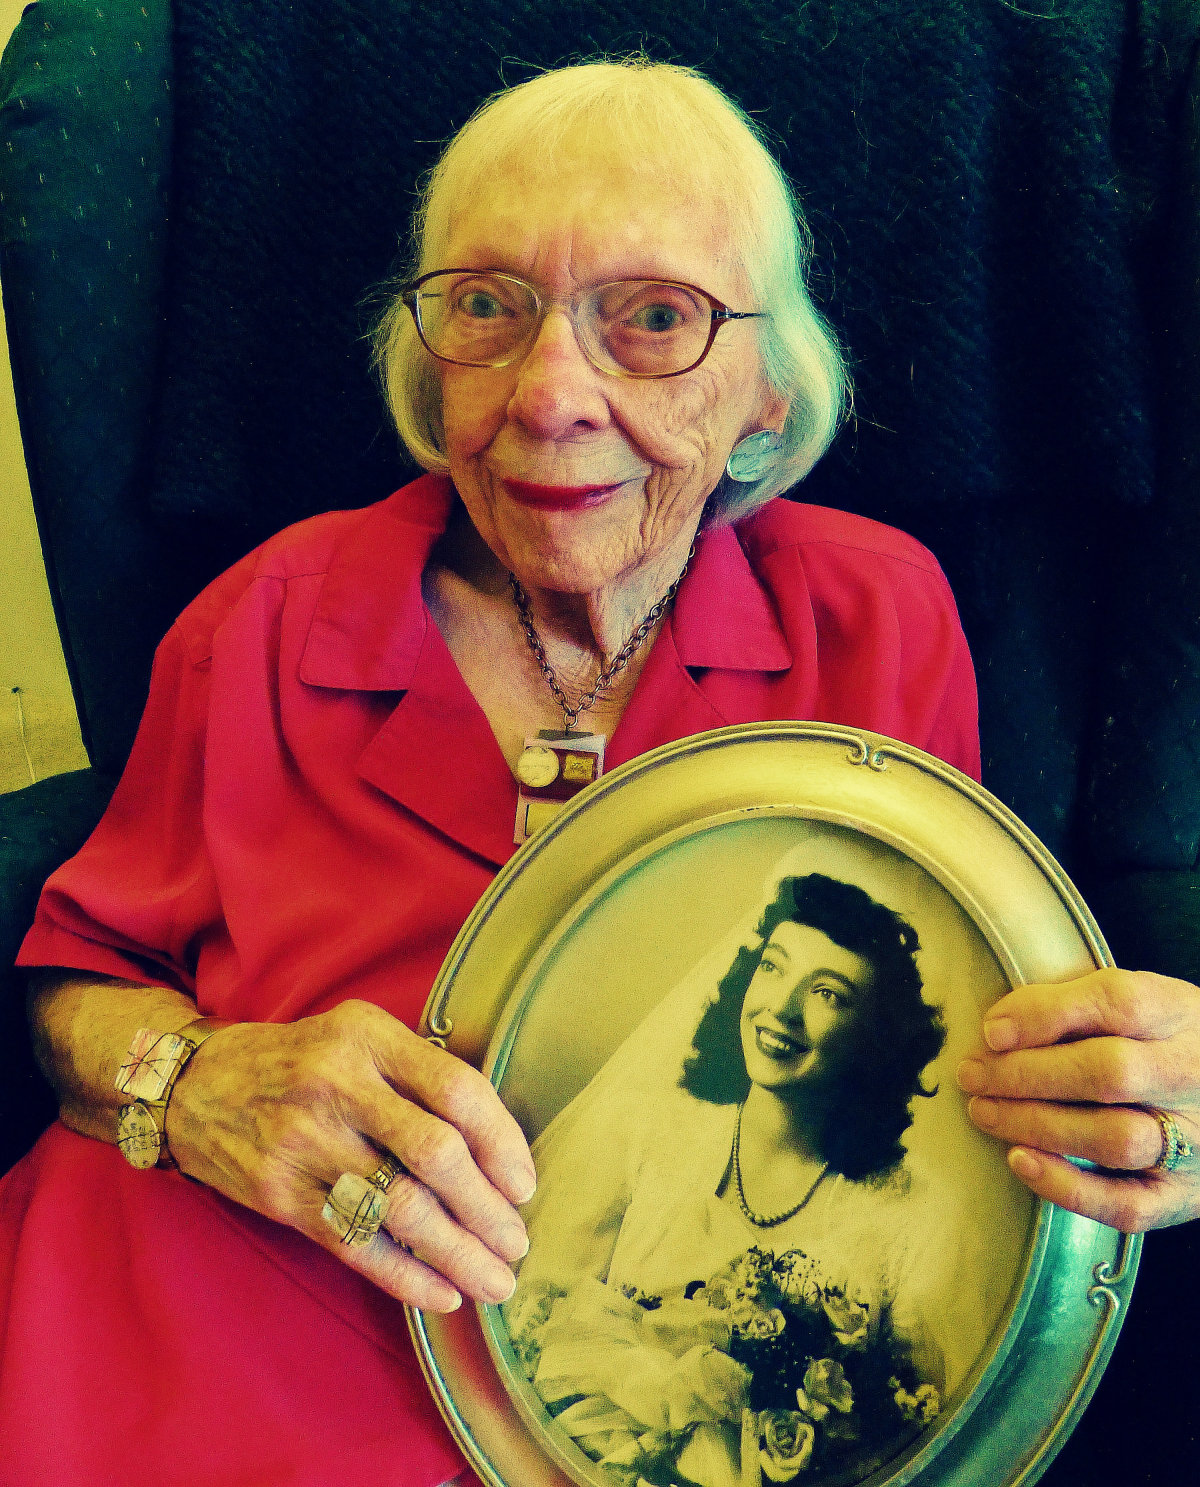   Grandma holding her wedding photo.  